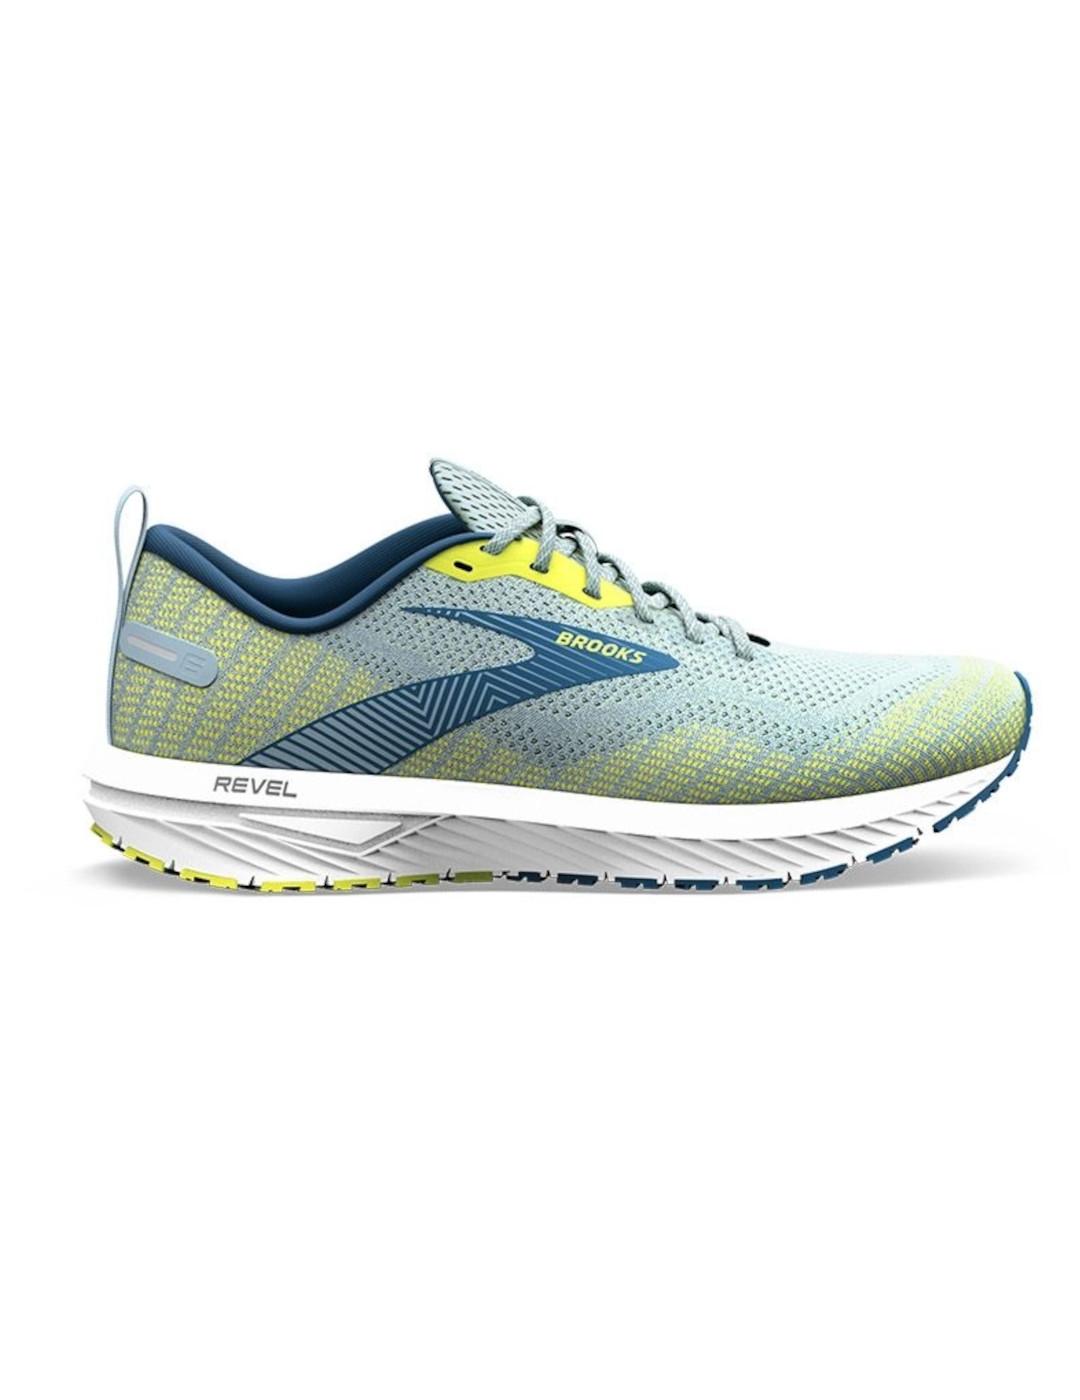 Brooks Launch 6 Zapatos para correr para mujer, Azul, 5